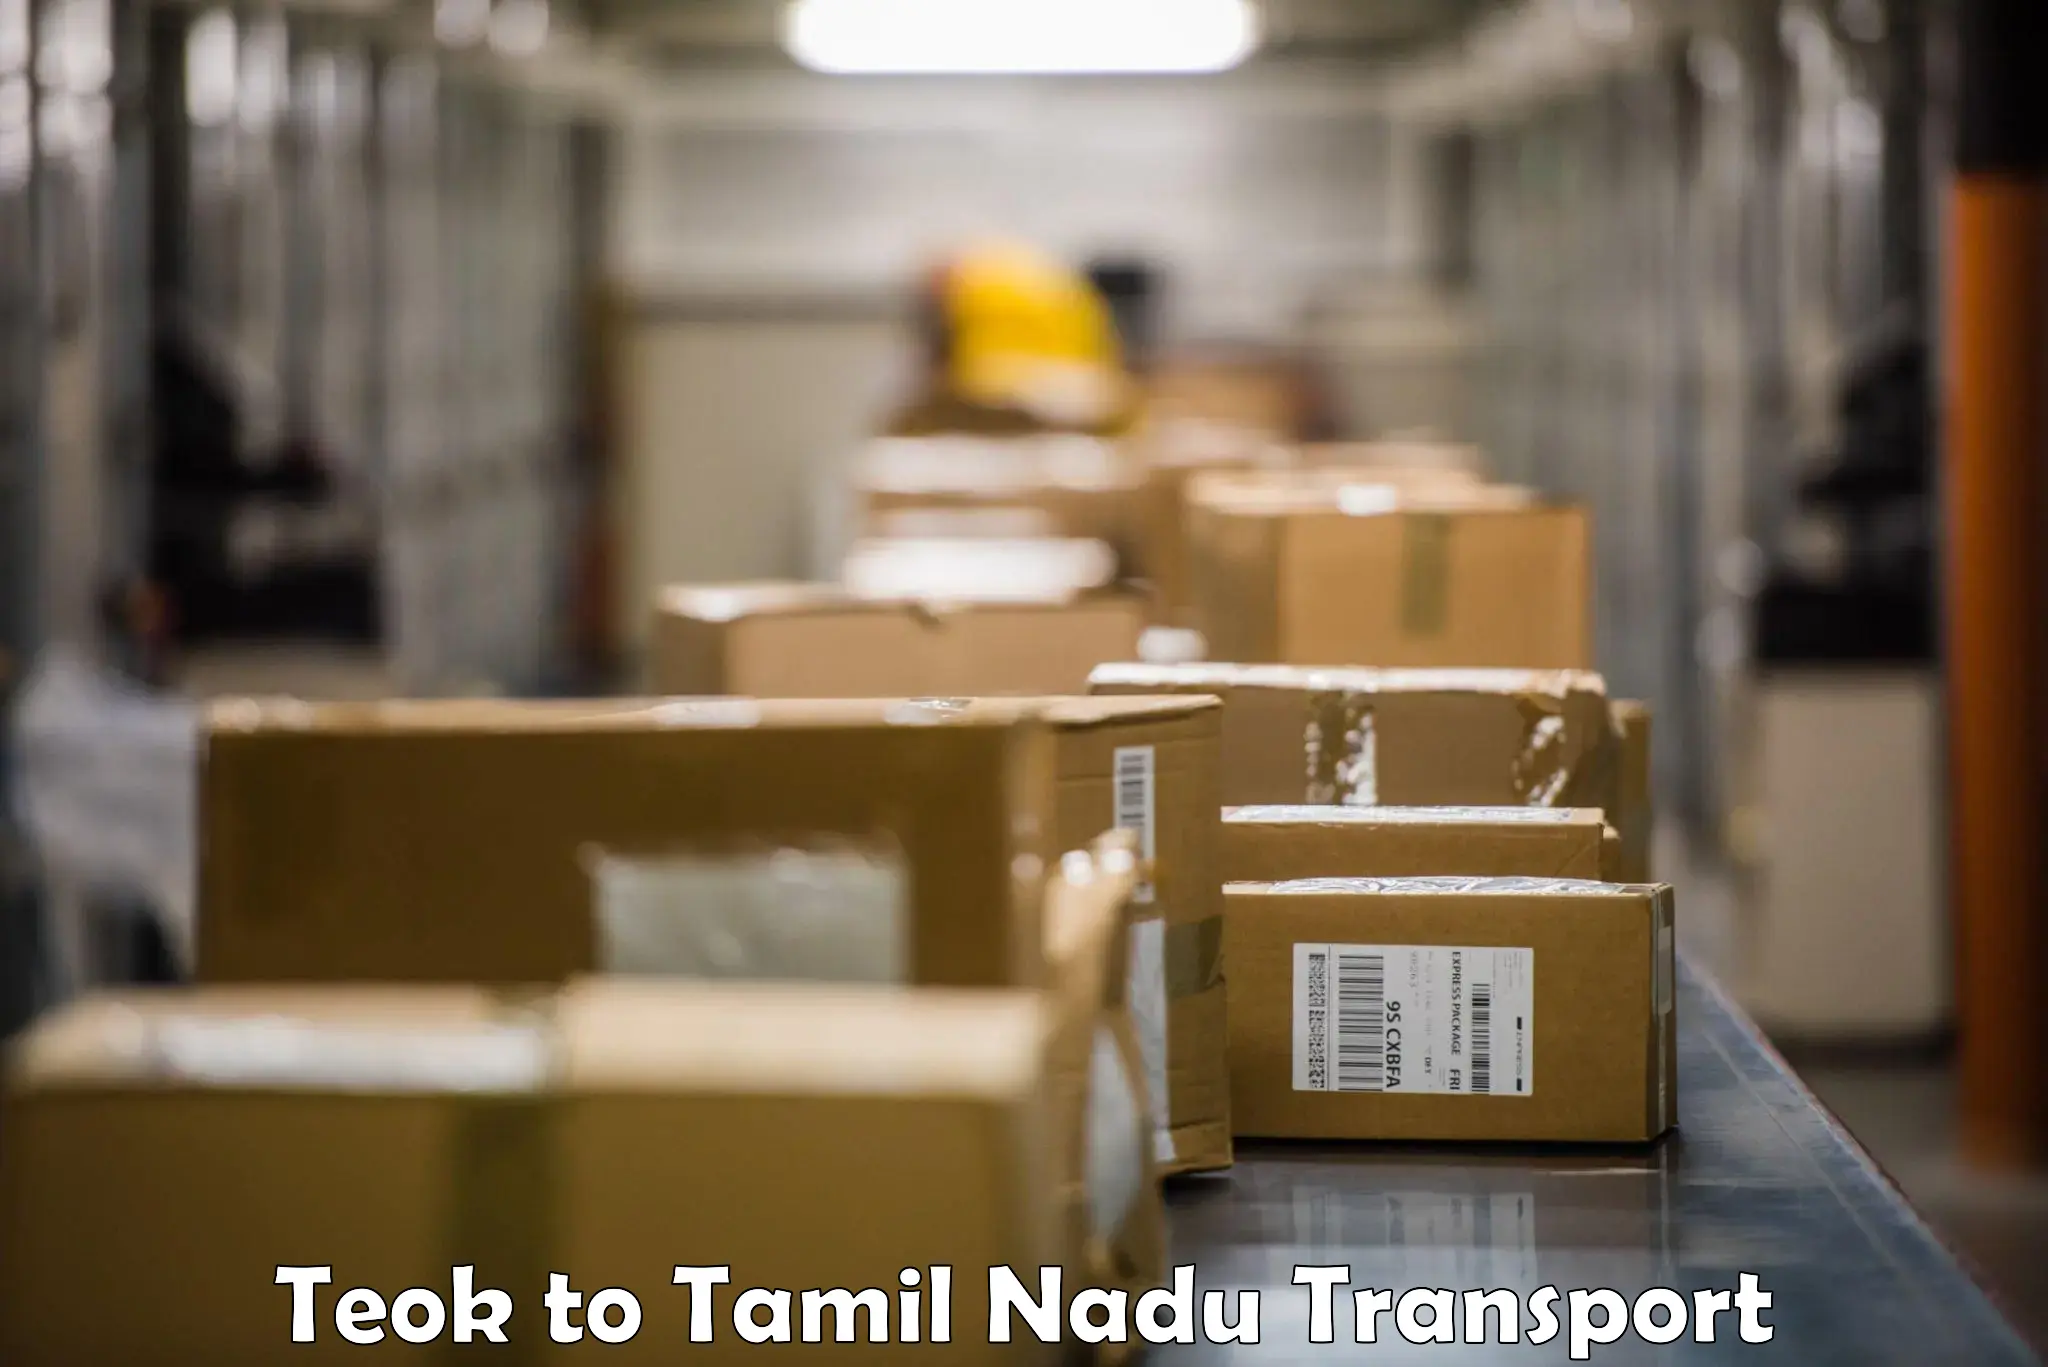 Furniture transport service Teok to Tamil Nadu